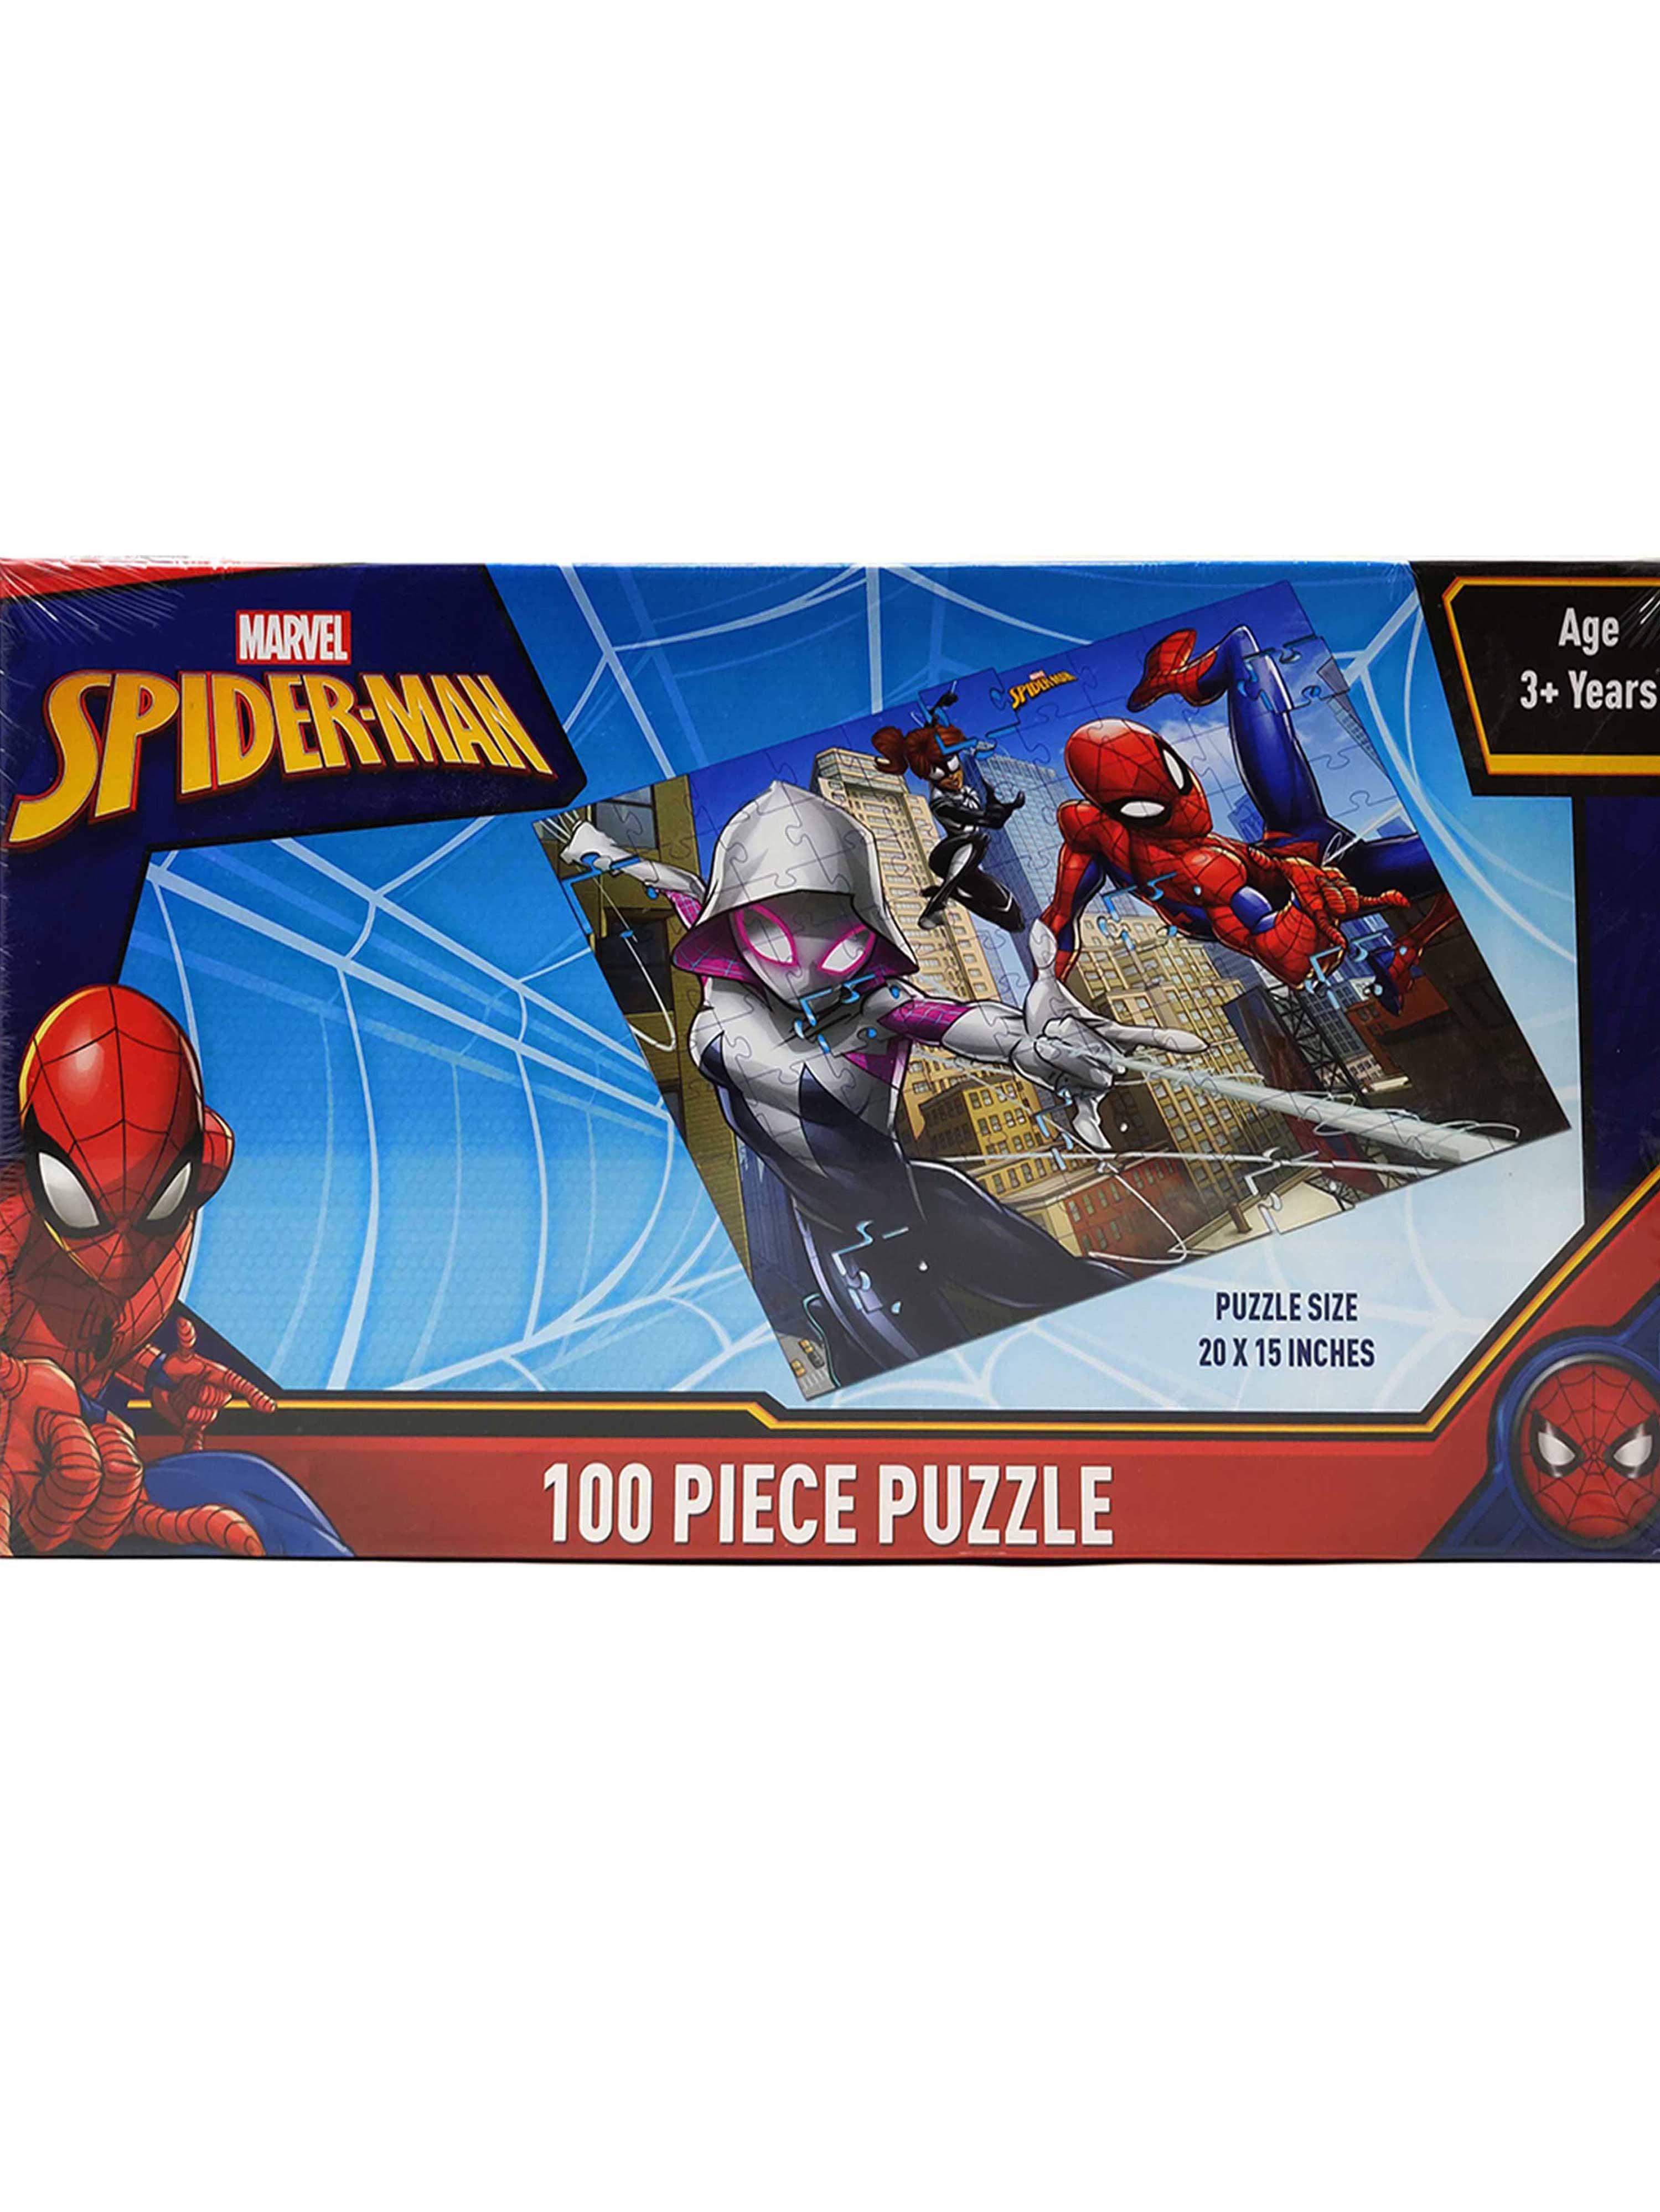 Marvel Spiderman 100 Piece Puzzle